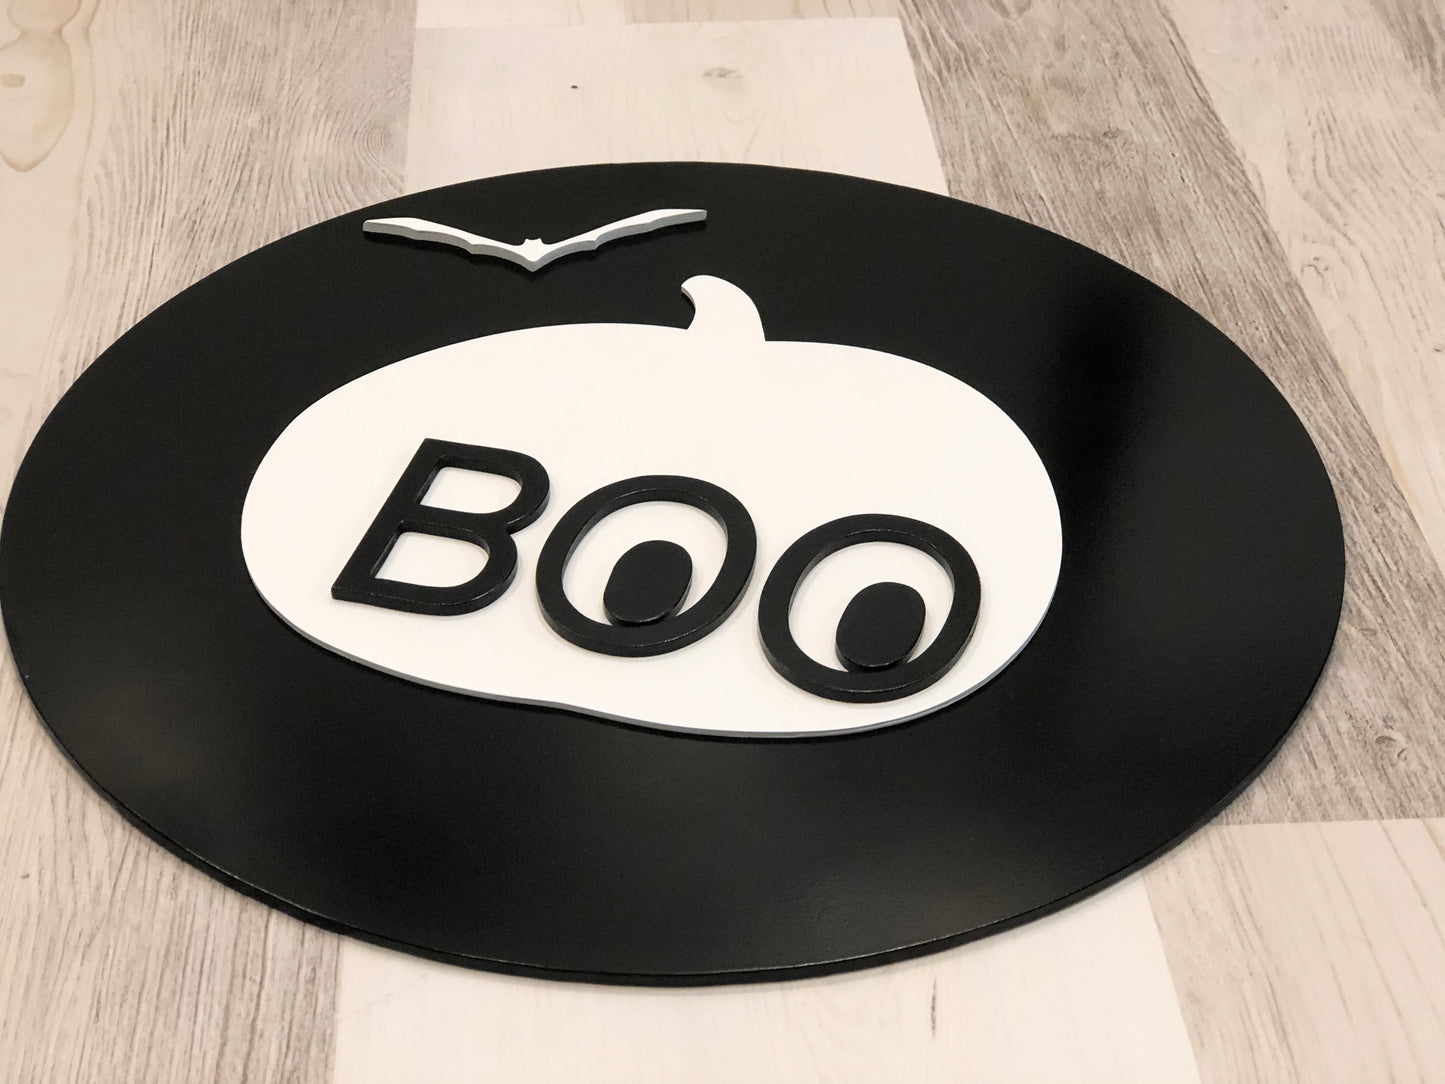 3D Boo Sign with Pumpkin